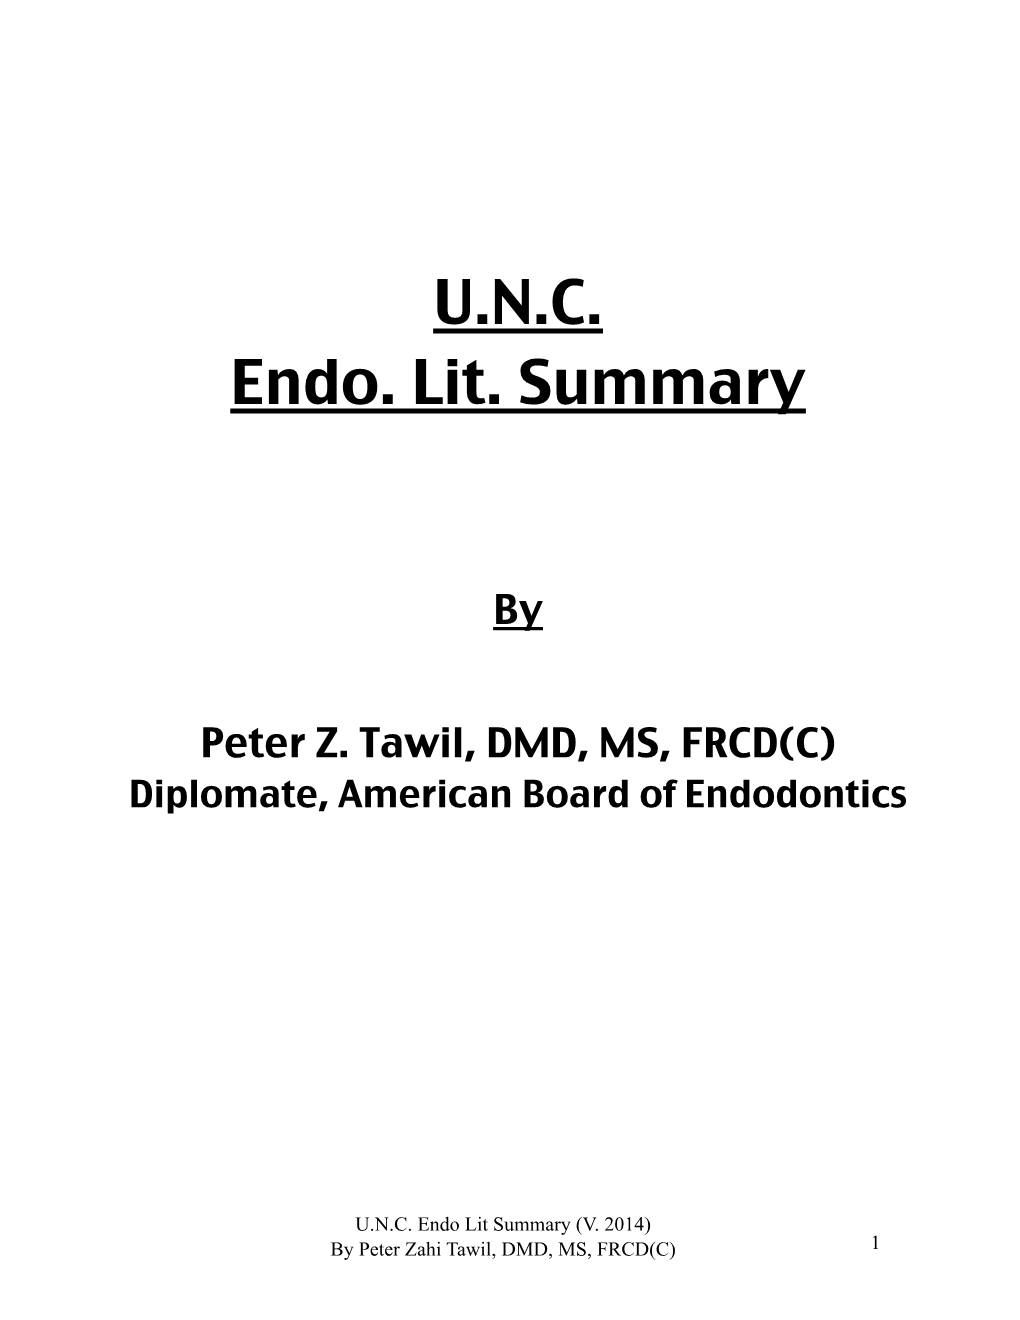 U.N.C. Endo Lit Summary (V